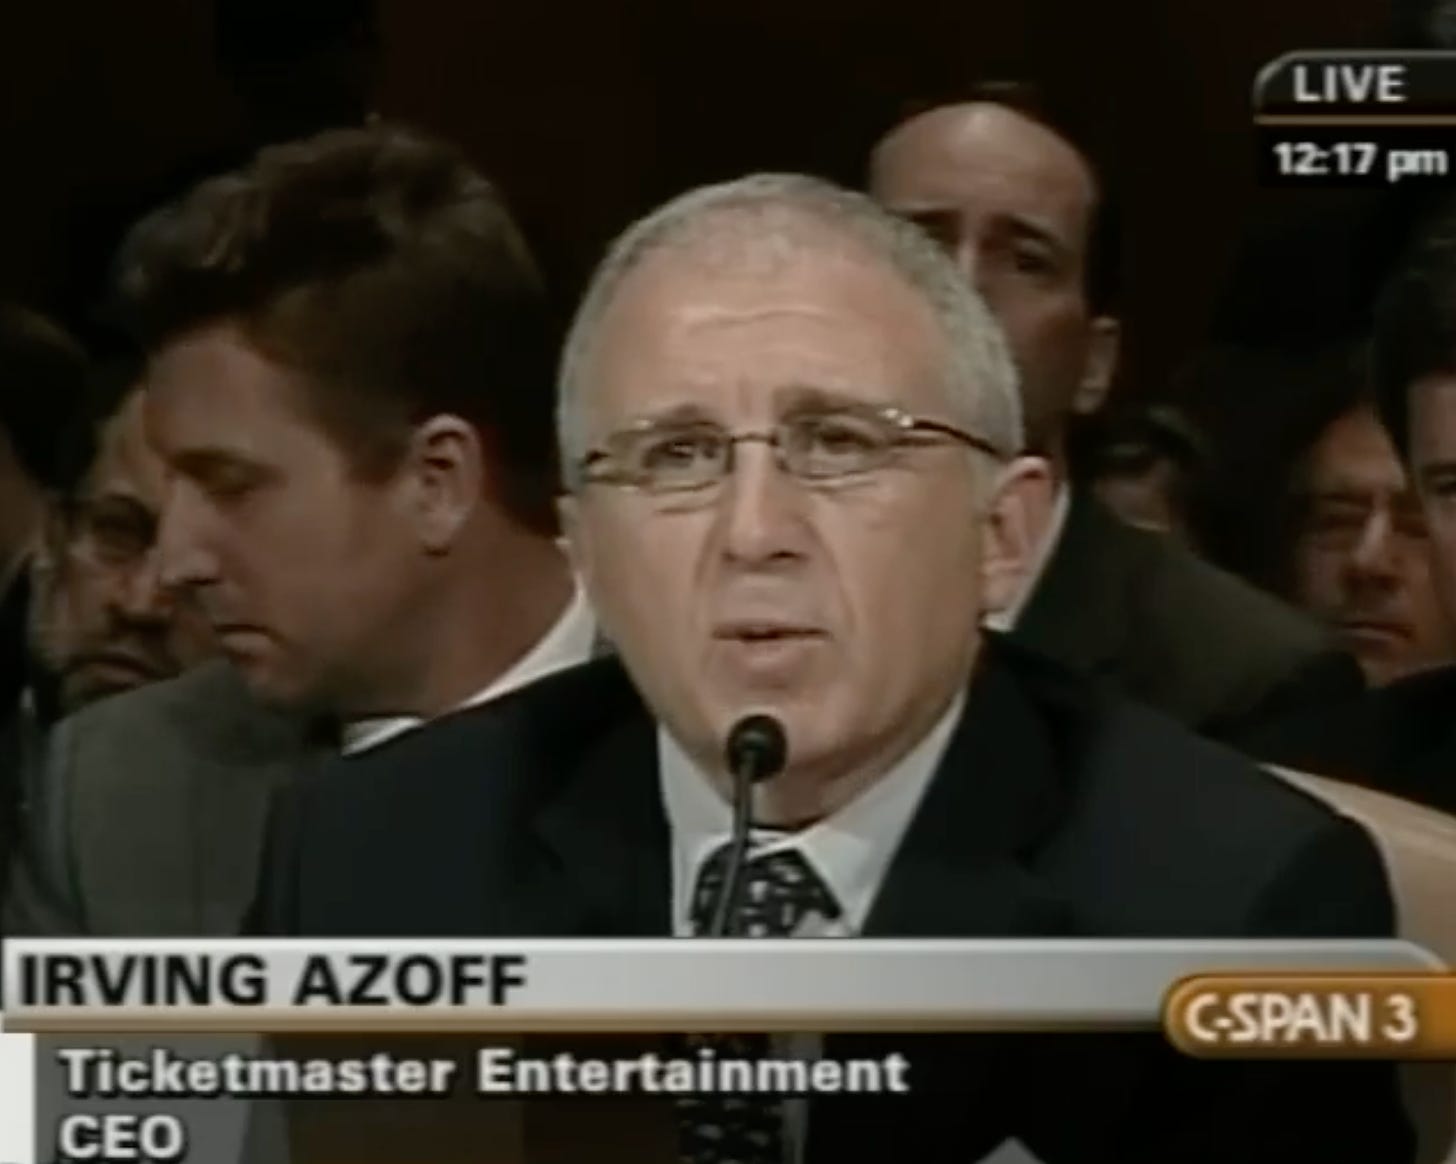 Irving Azoff testifying at the hearing